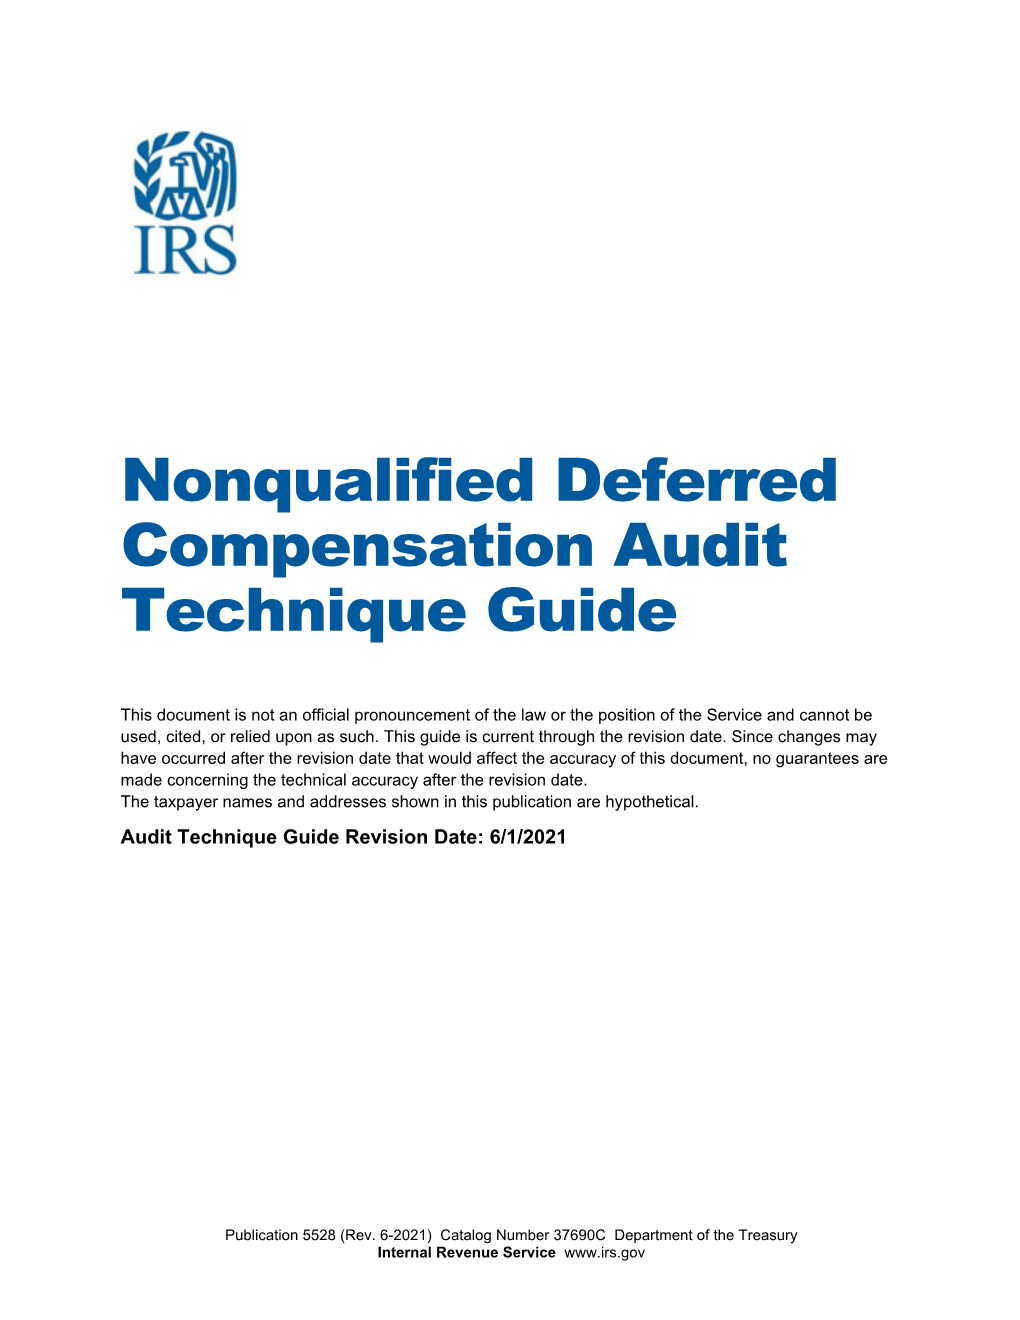 Nonqualified Deferred Compensation Audit Technique Guide